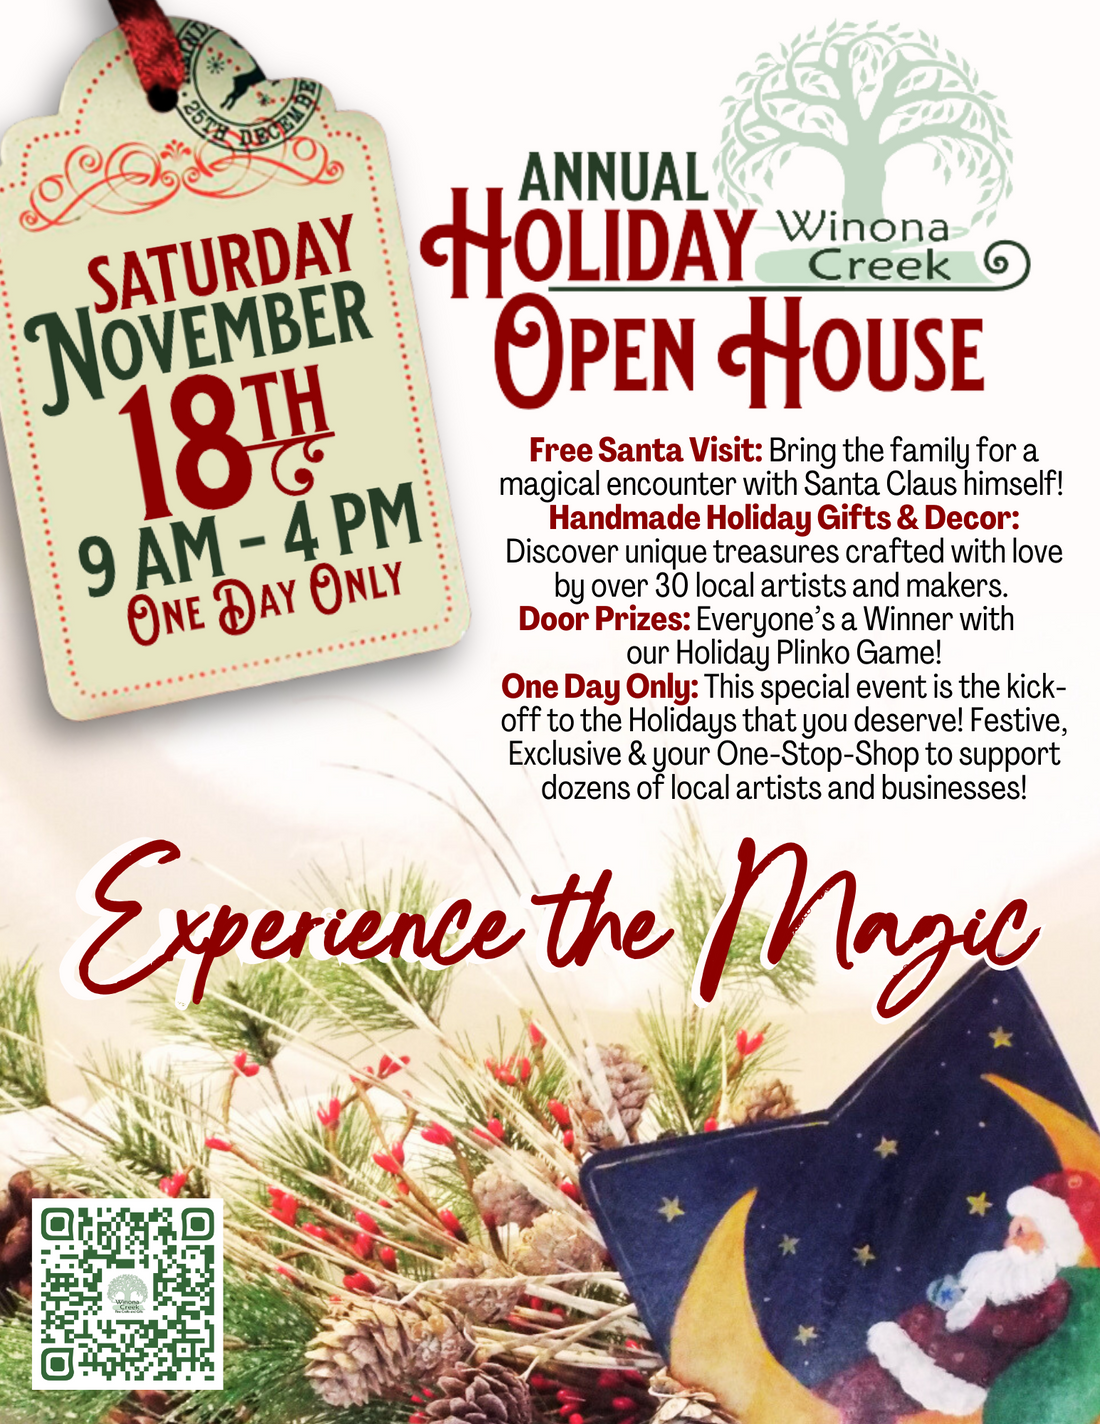 Winona Creek's Annual Holiday Open House: A Magical Neighborhood Celebration